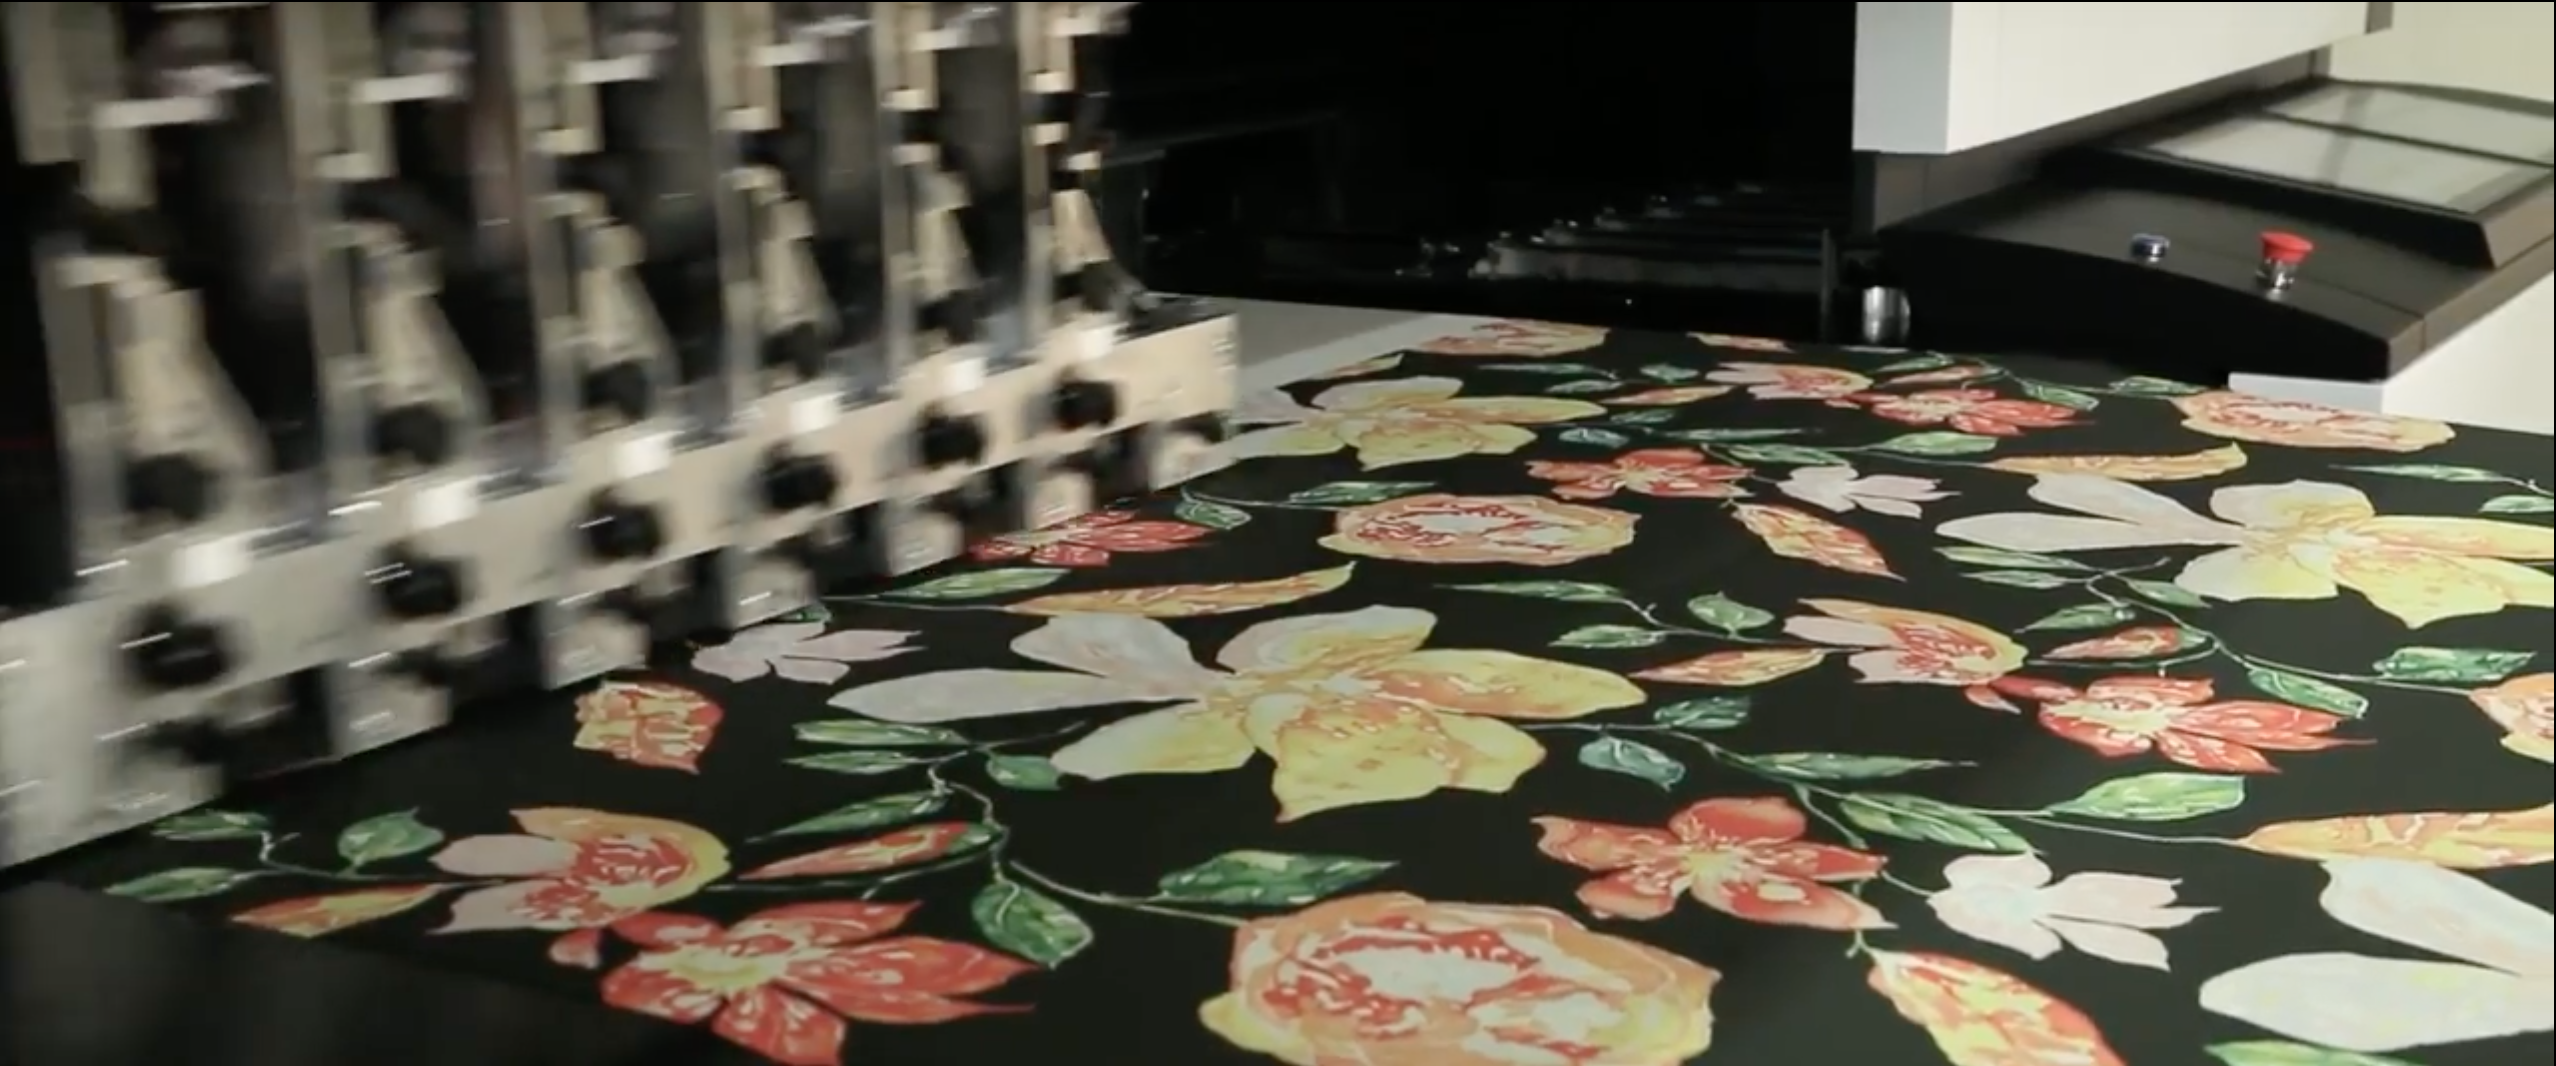 digital textile printing market report